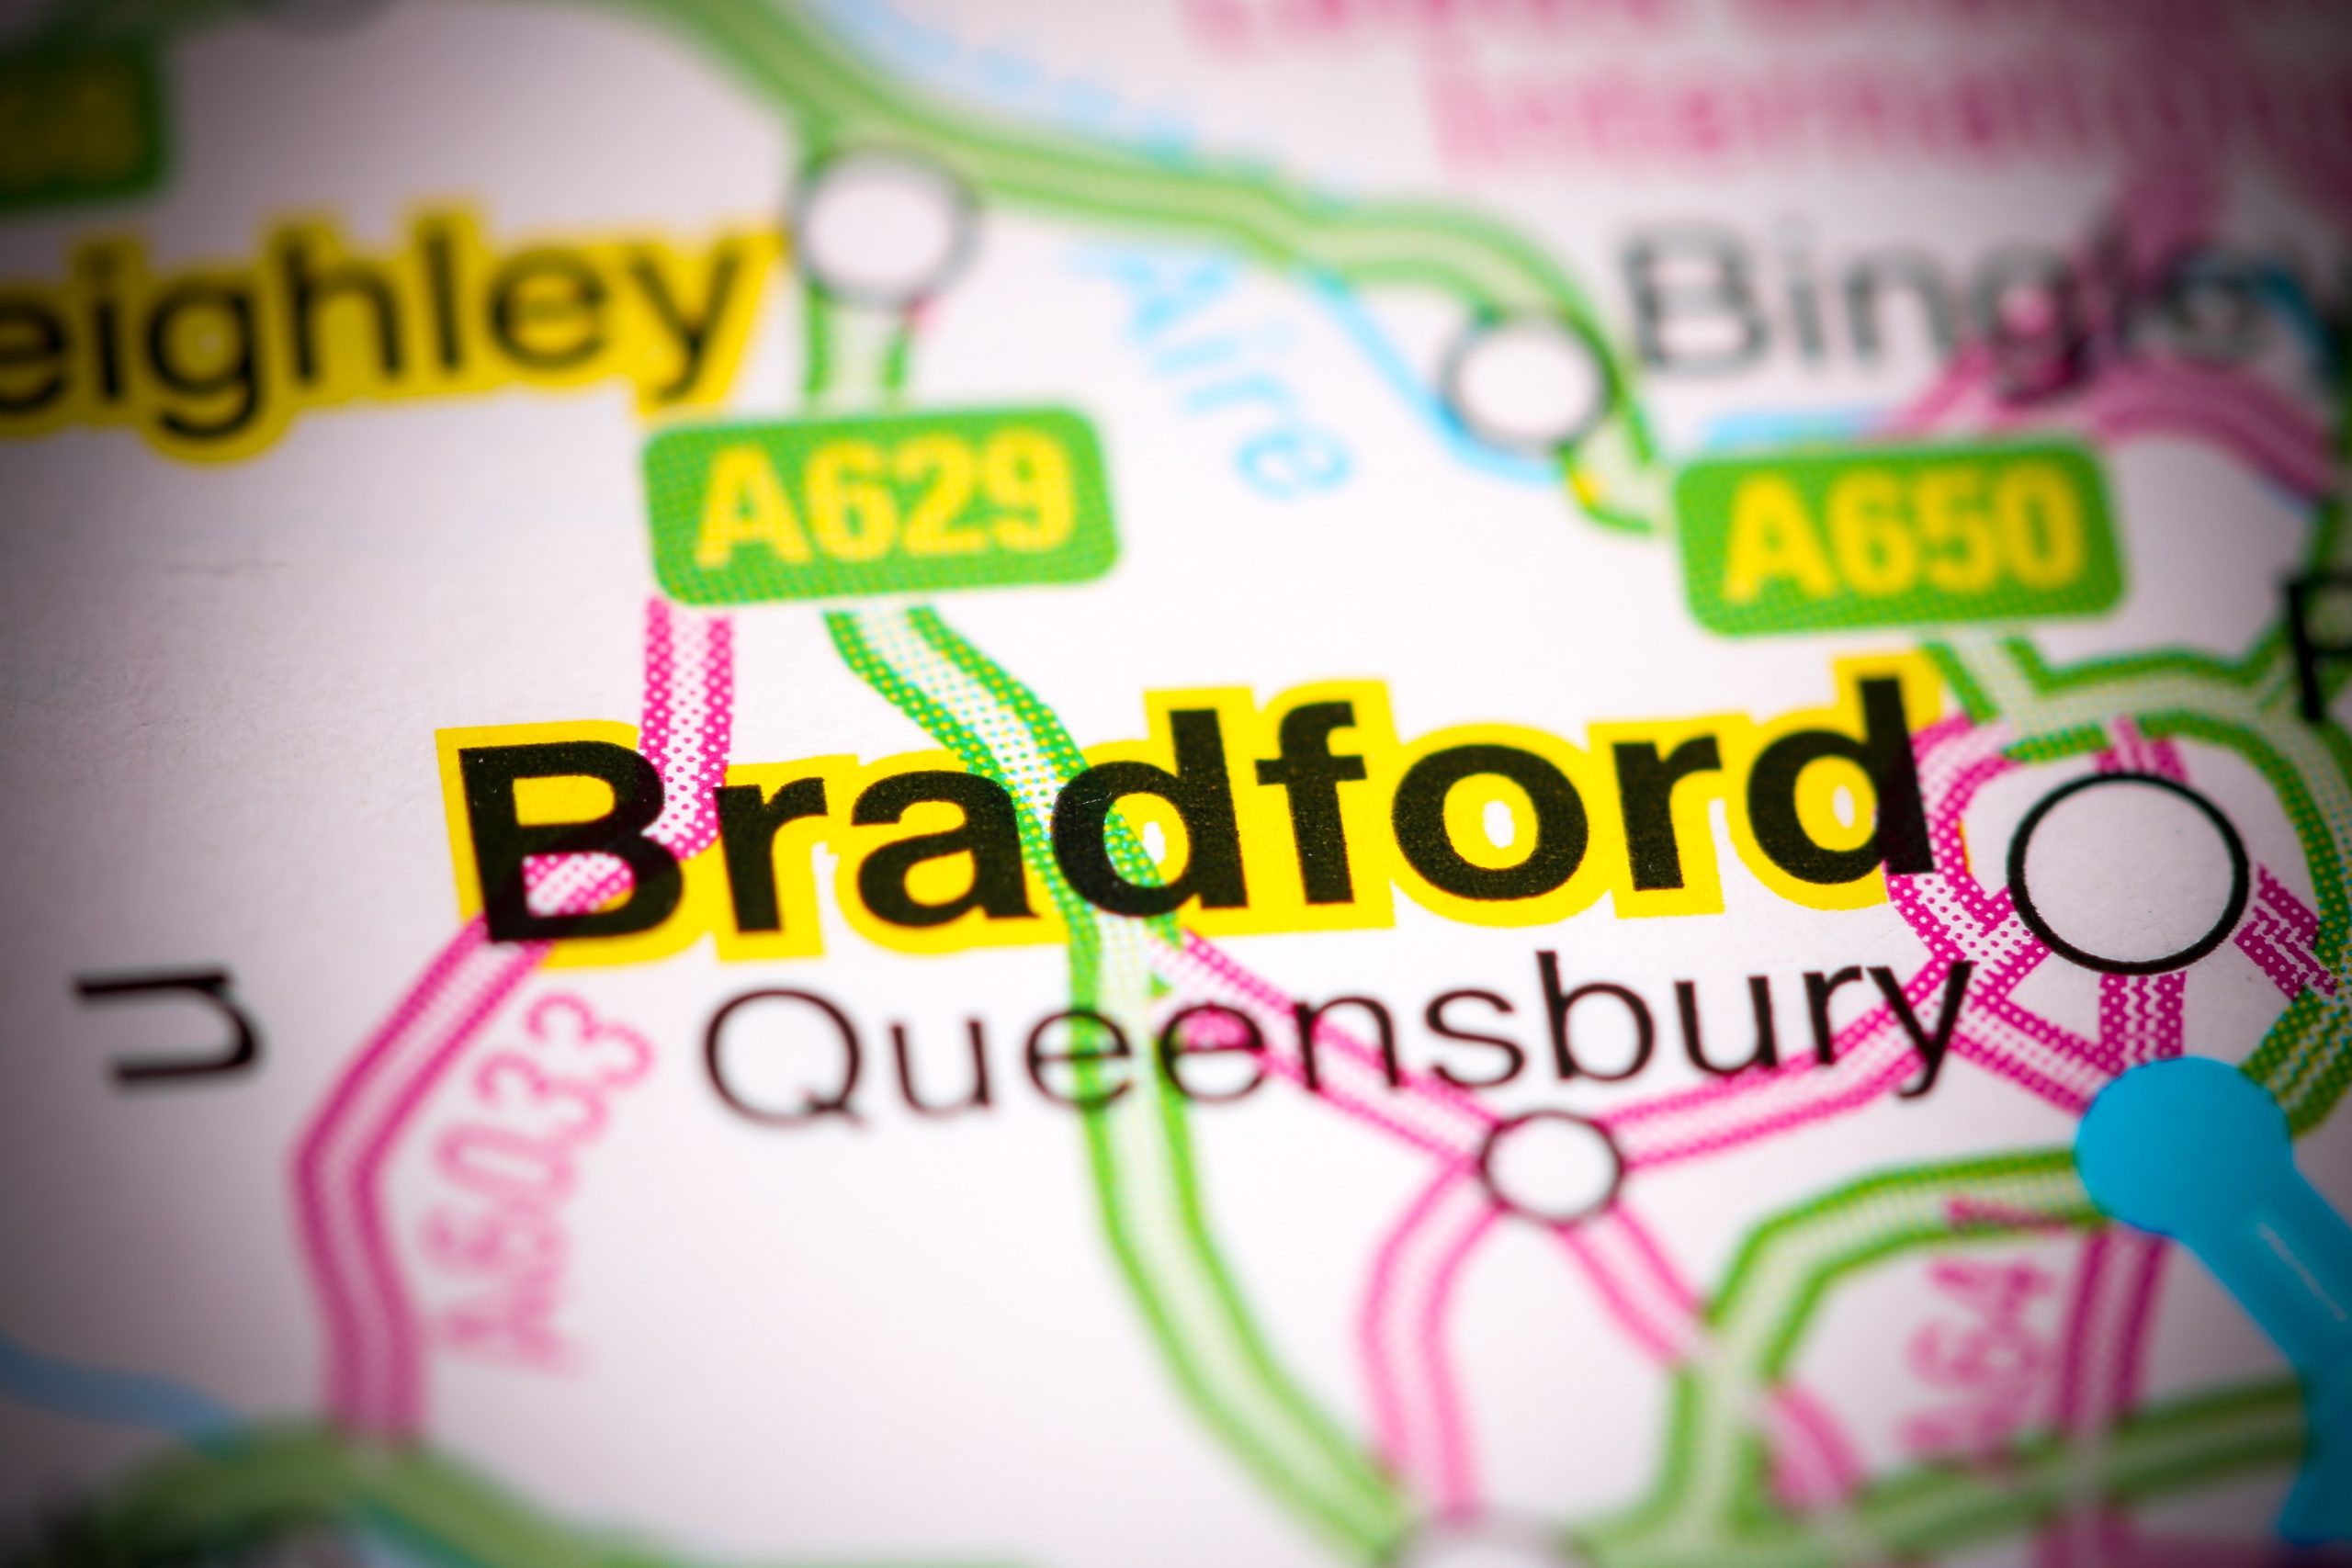 Bradford Clean Air Zone goes live